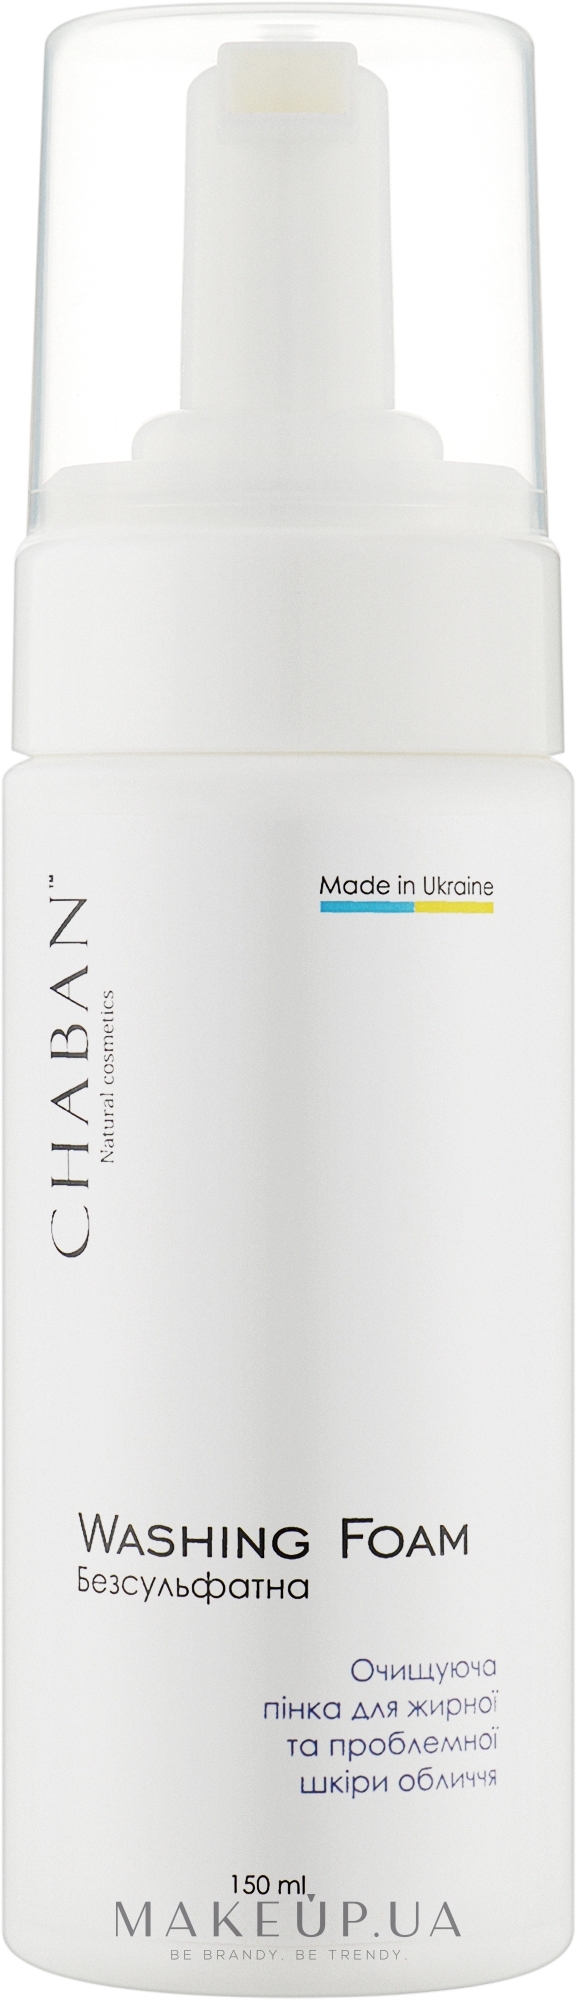 Очищающая пенка для жирной и проблемной кожи лица - Chaban Natural Cosmetics Washing Foam — фото 150ml